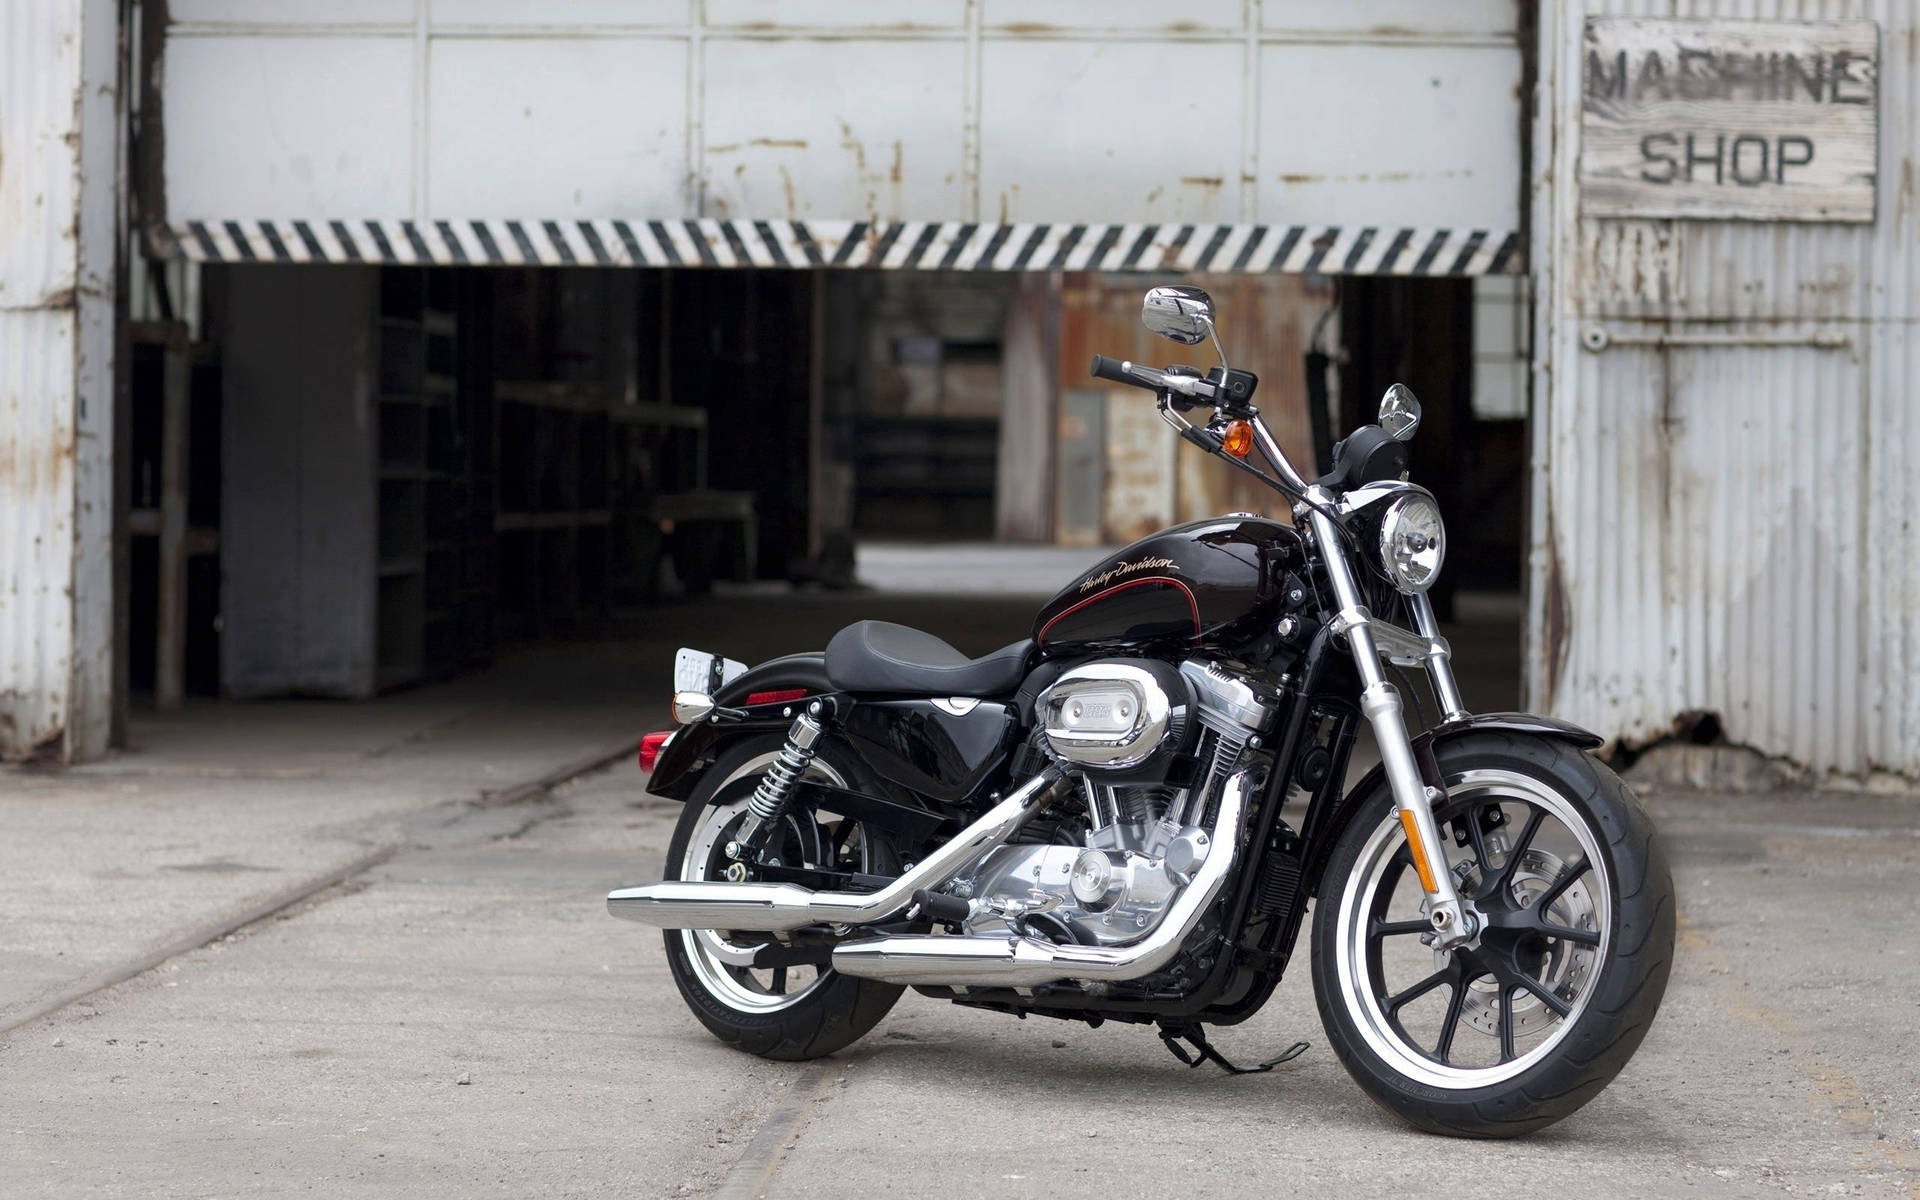 Harley Davidson In The Machine Shop